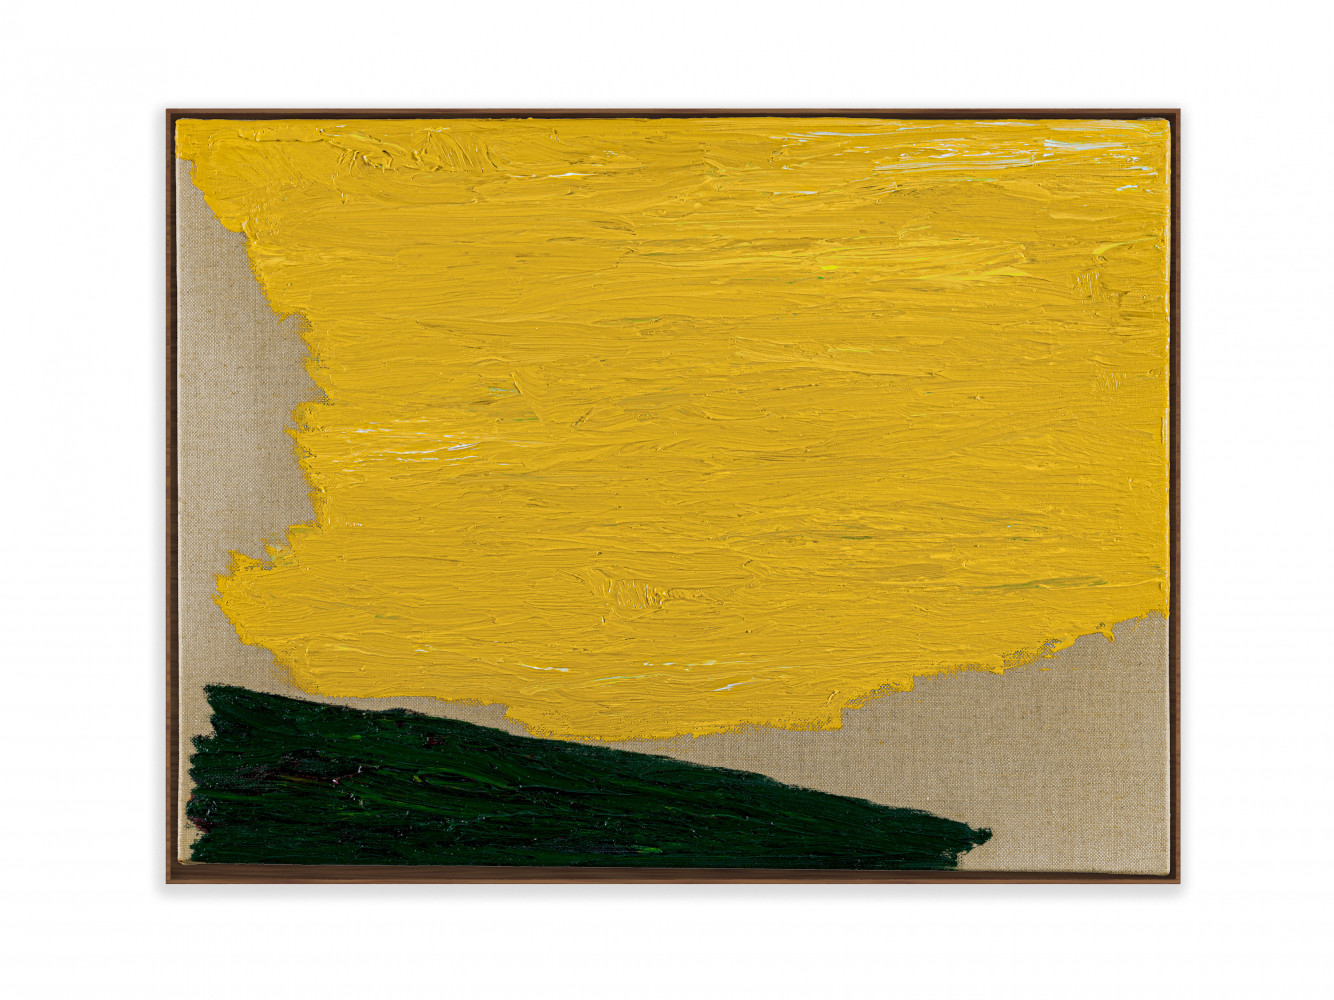 Pedro Cabrita Reis, ‘Landscapes (series XI) #15’, 2020, Öl auf roher Leinwand